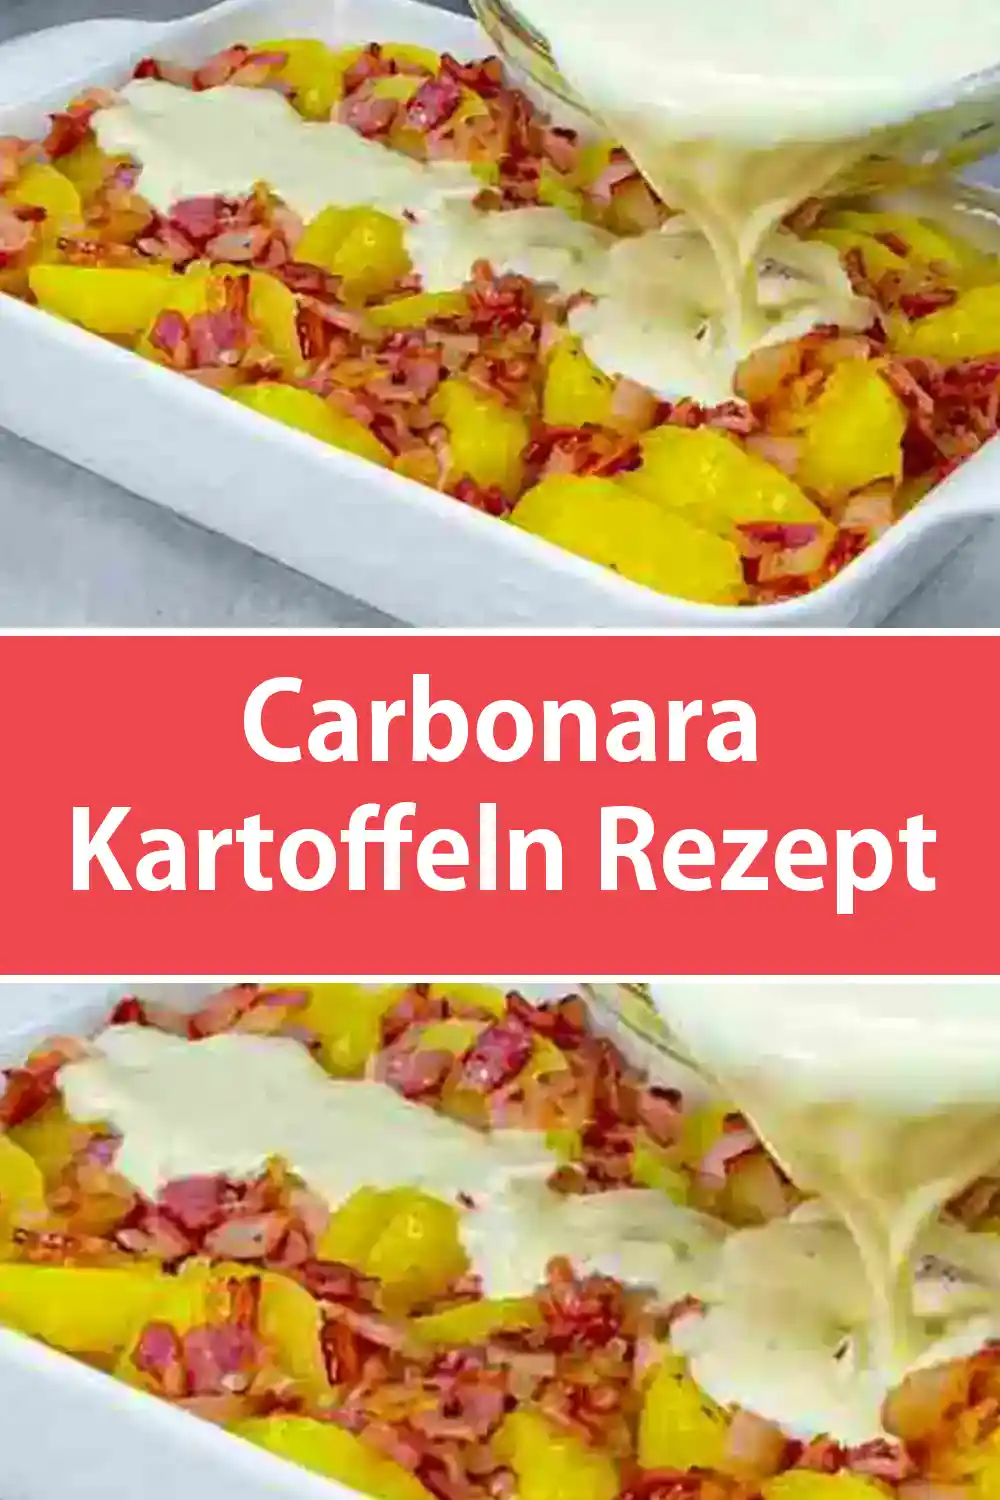 Carbonara Kartoffeln Rezept Fertig in 20 min